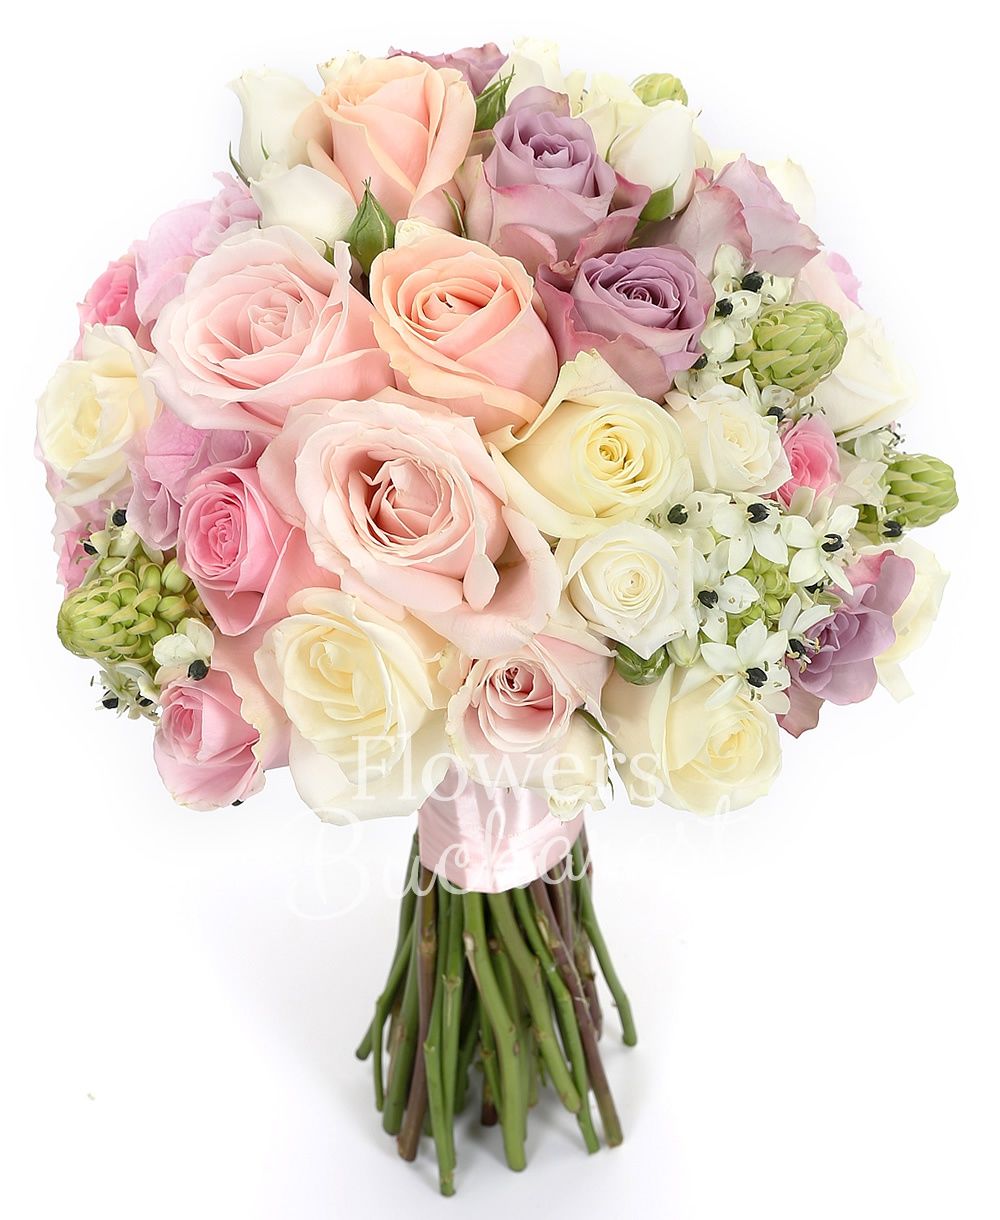 6 ornithogalum, 10 white roses, 7 memory lane, 7 sweet avalanche roses, 7 pink roses, 2 hydrangeas, 5 white miniroses